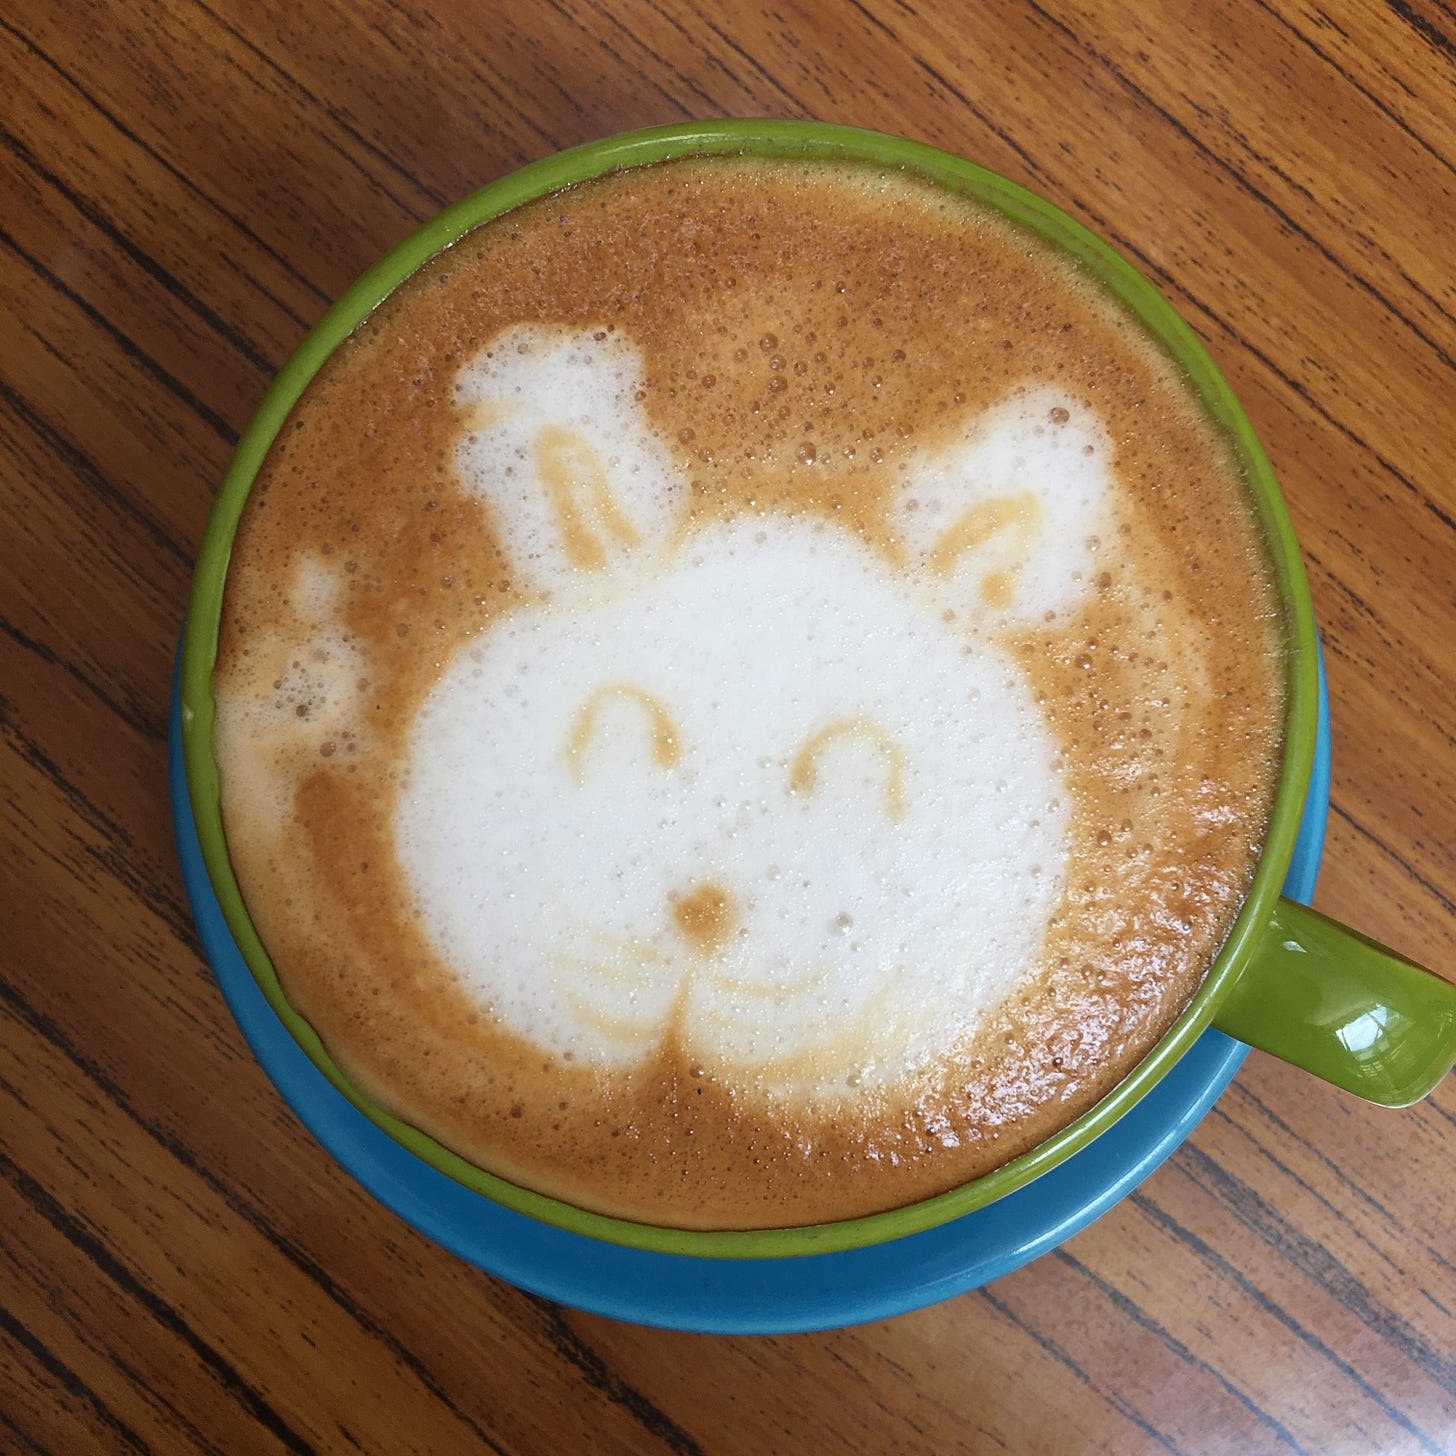 latte with animal face foam (cat? bear?)